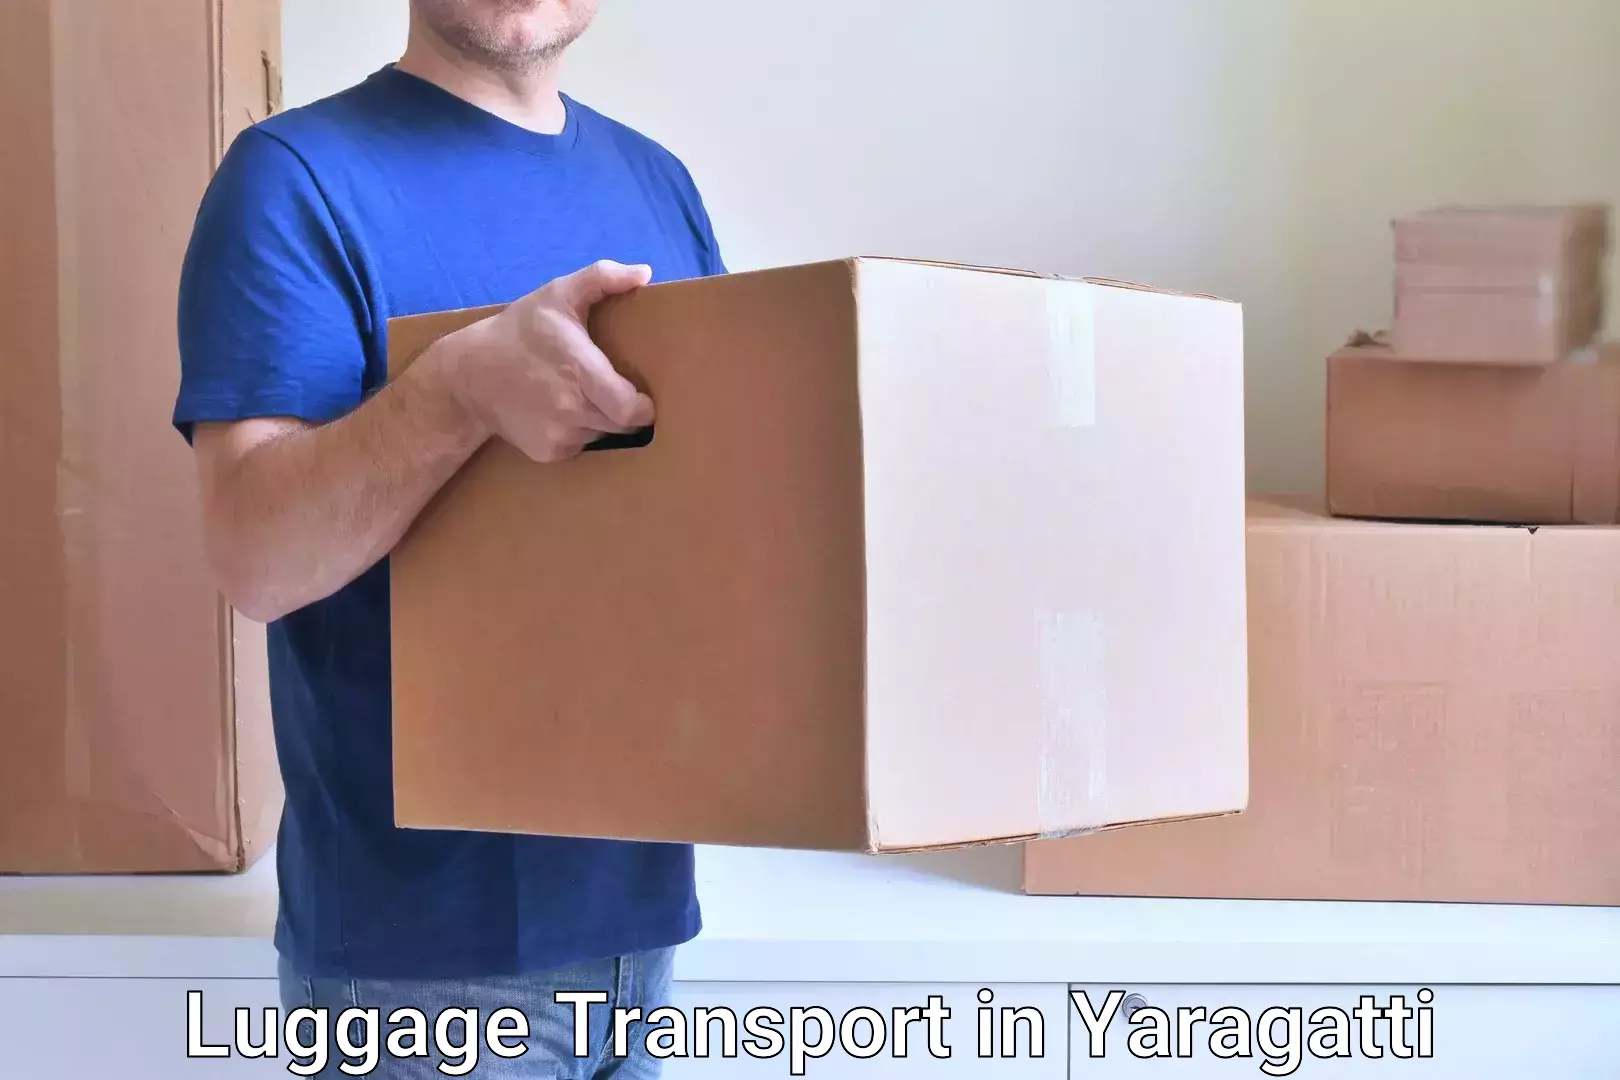 Express baggage shipping in Yaragatti